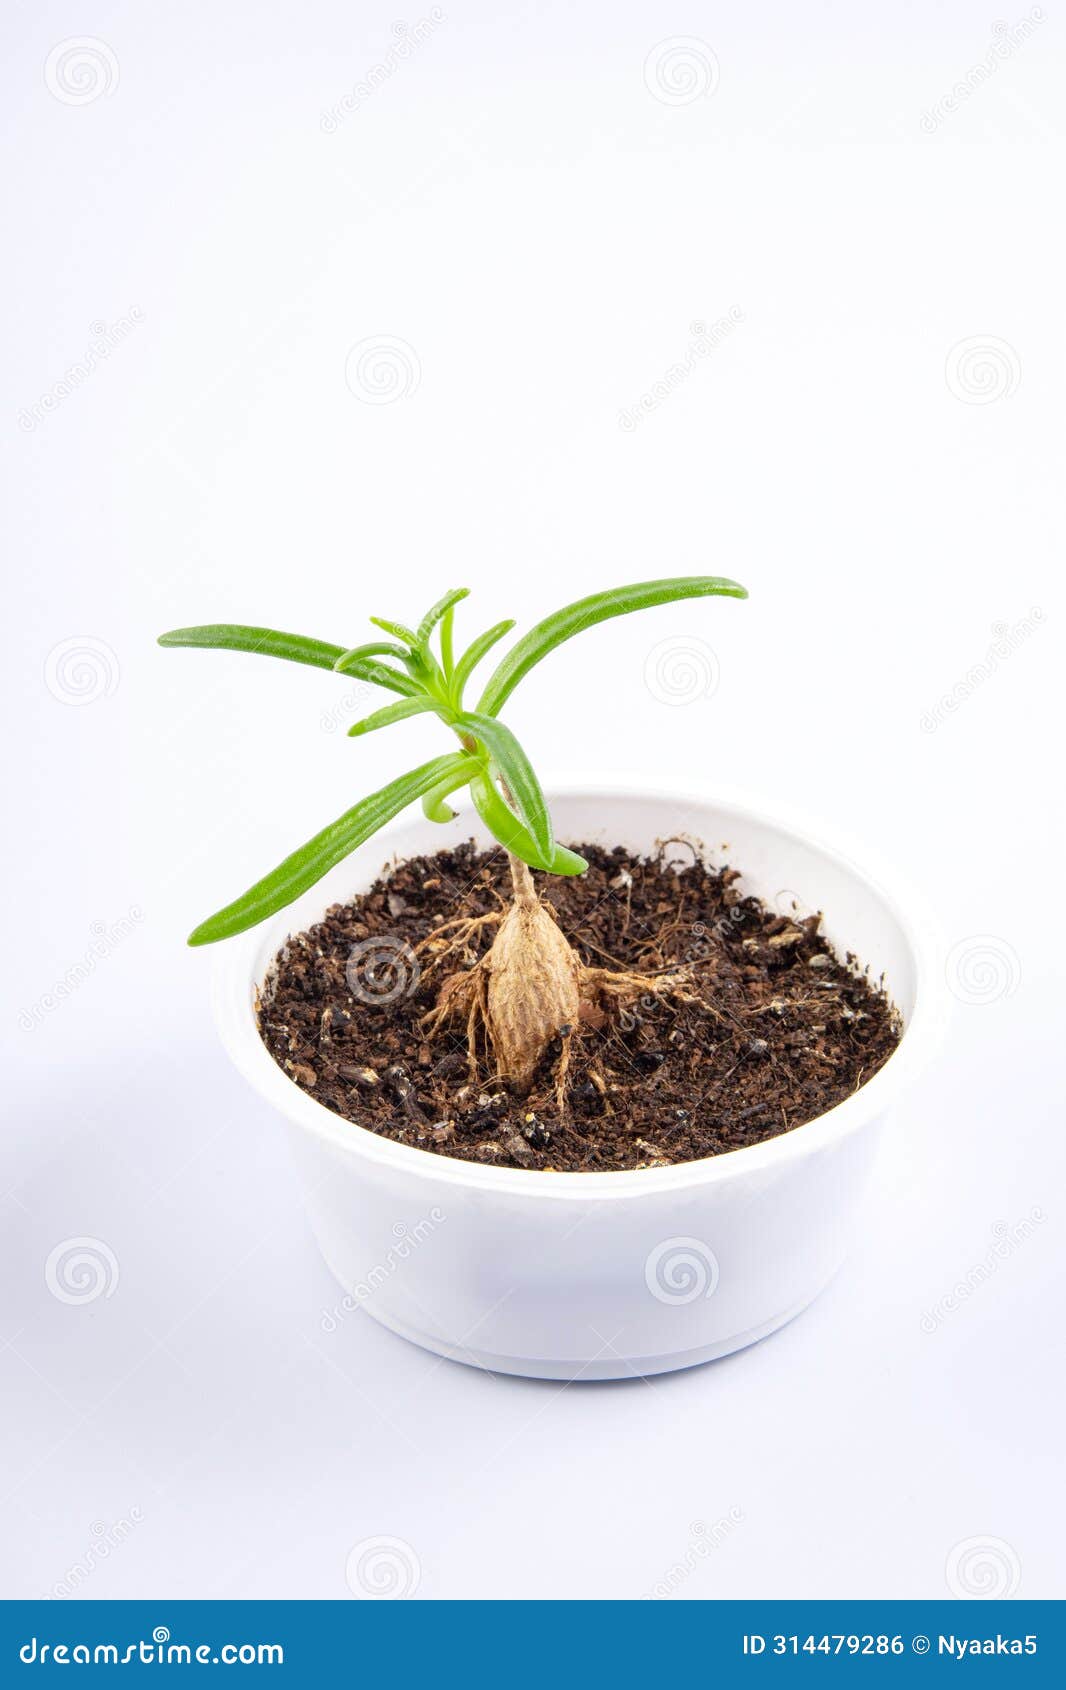 young plant mestoklema (macrorhiza) - dwarf caudex succulent, in a small white bowl.